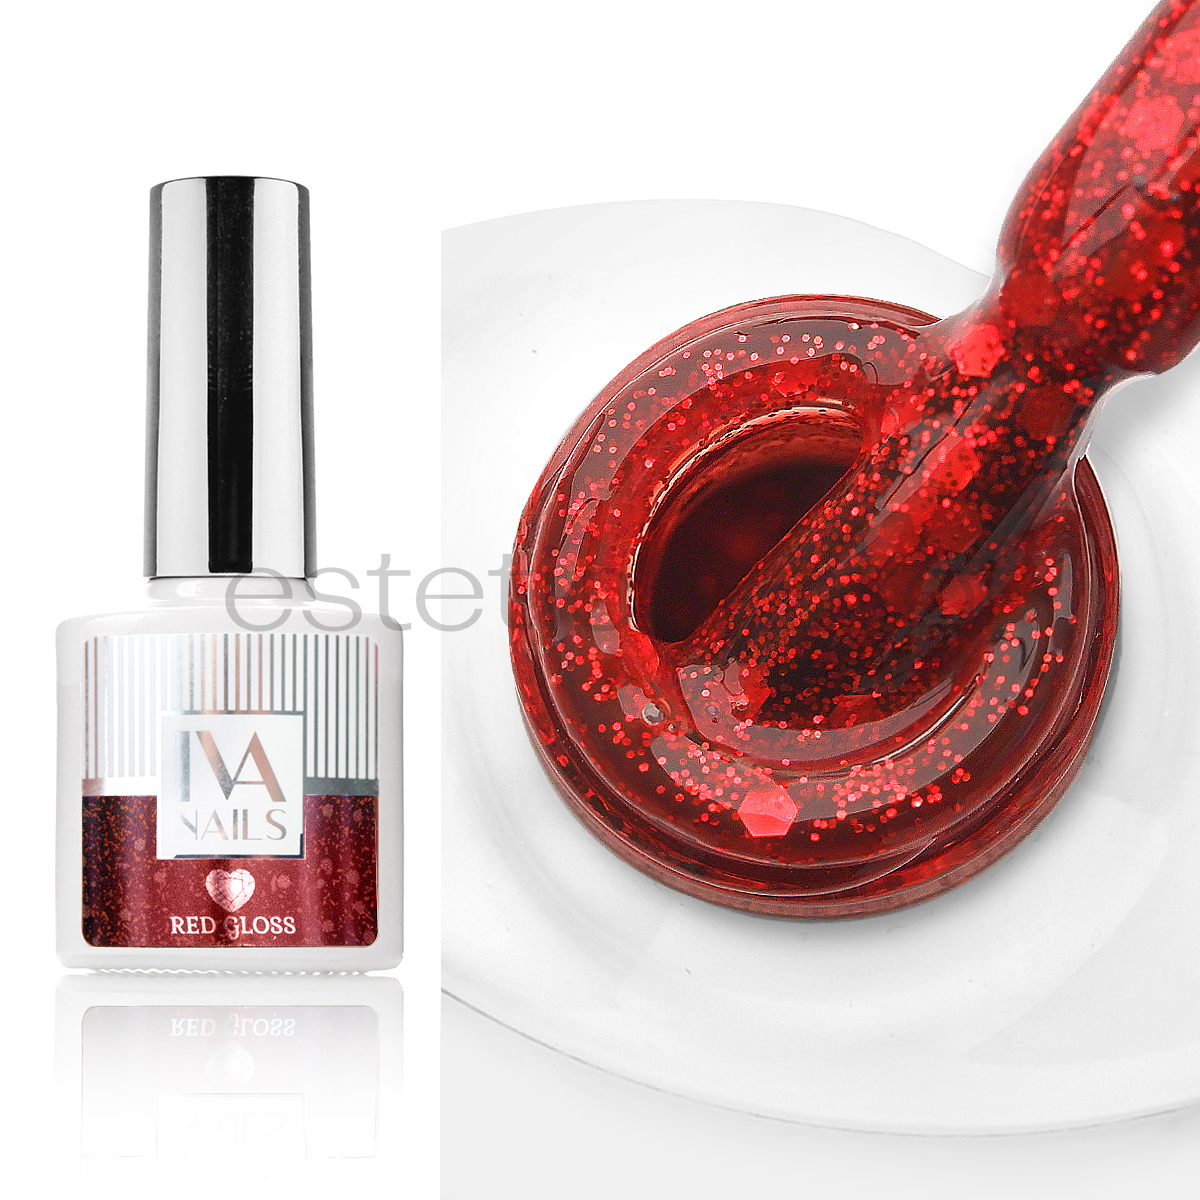 Гель-лак Iva Nails Red Gloss 04, 8 мл.